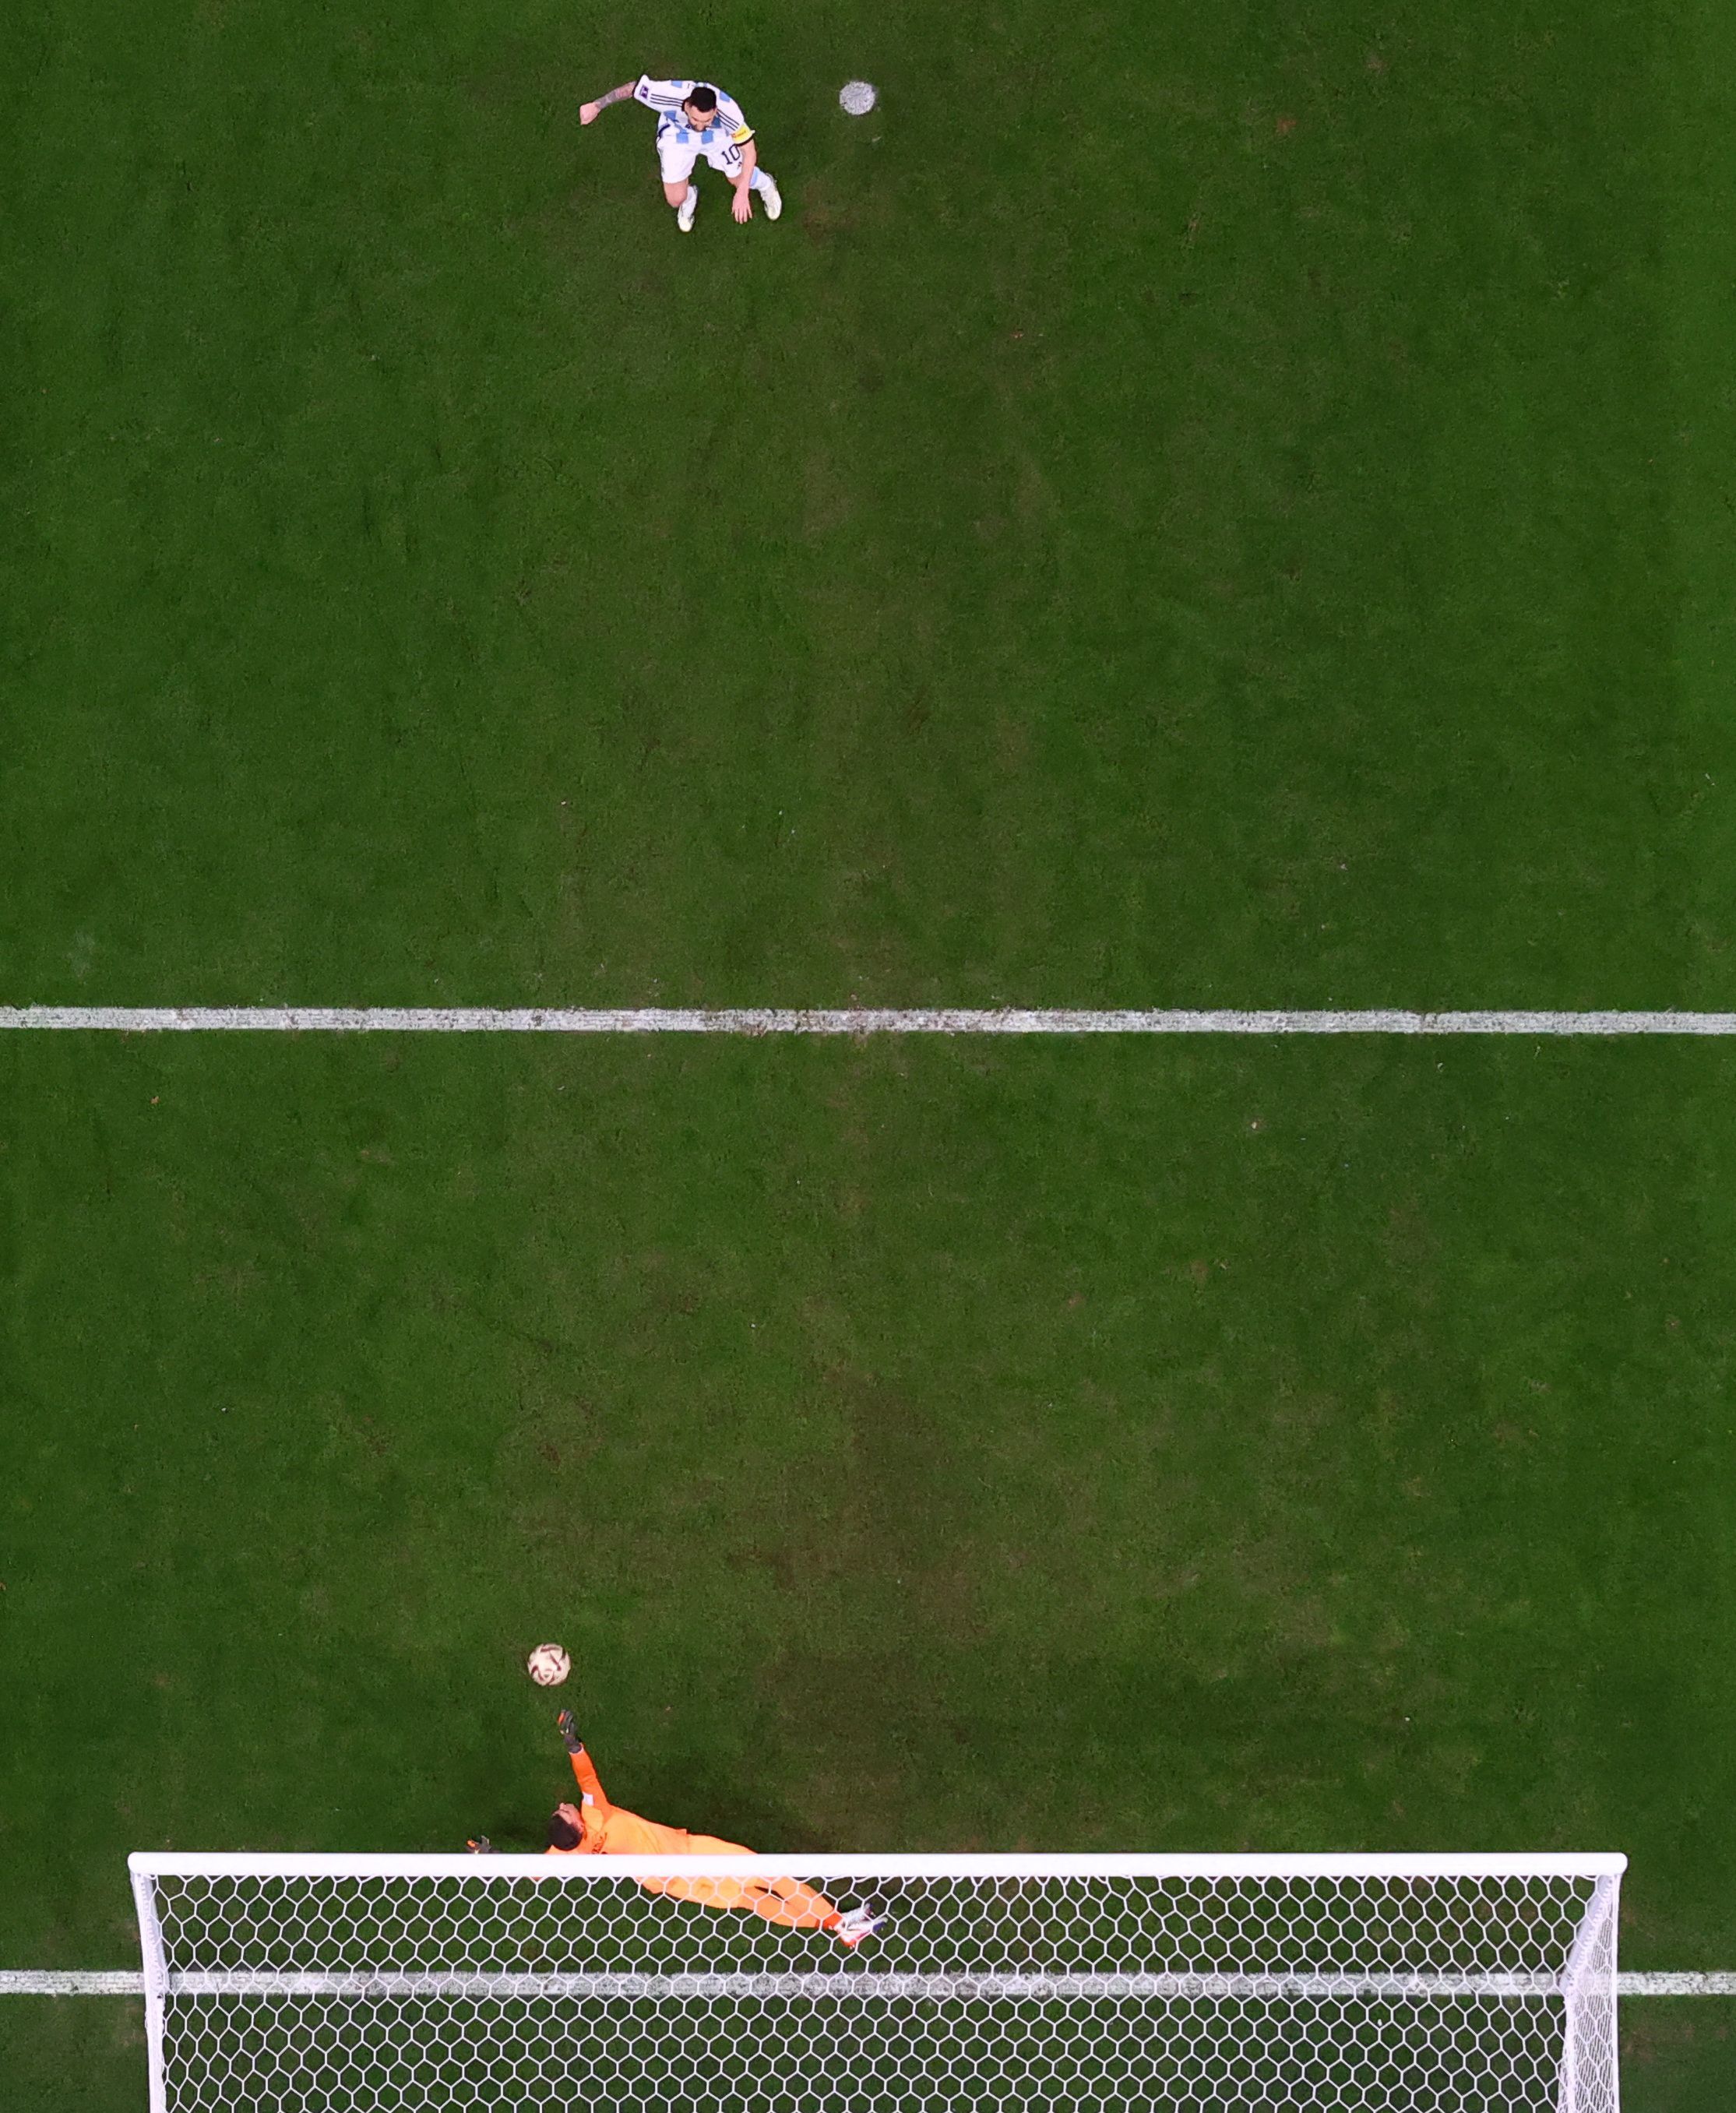 Messi scores his penalty vs Croatia.